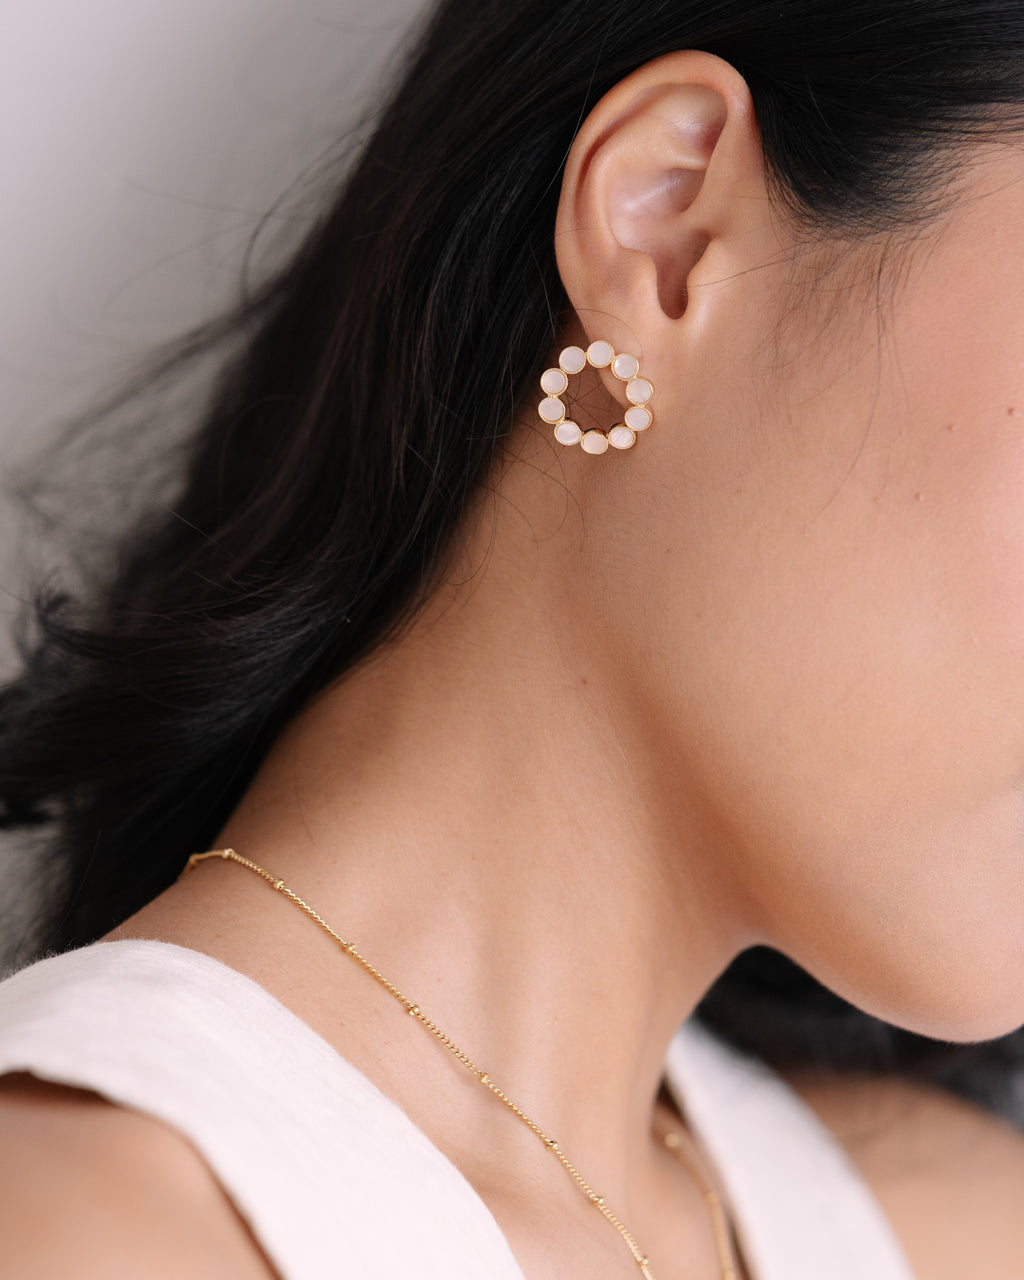 Tara nacre earrings